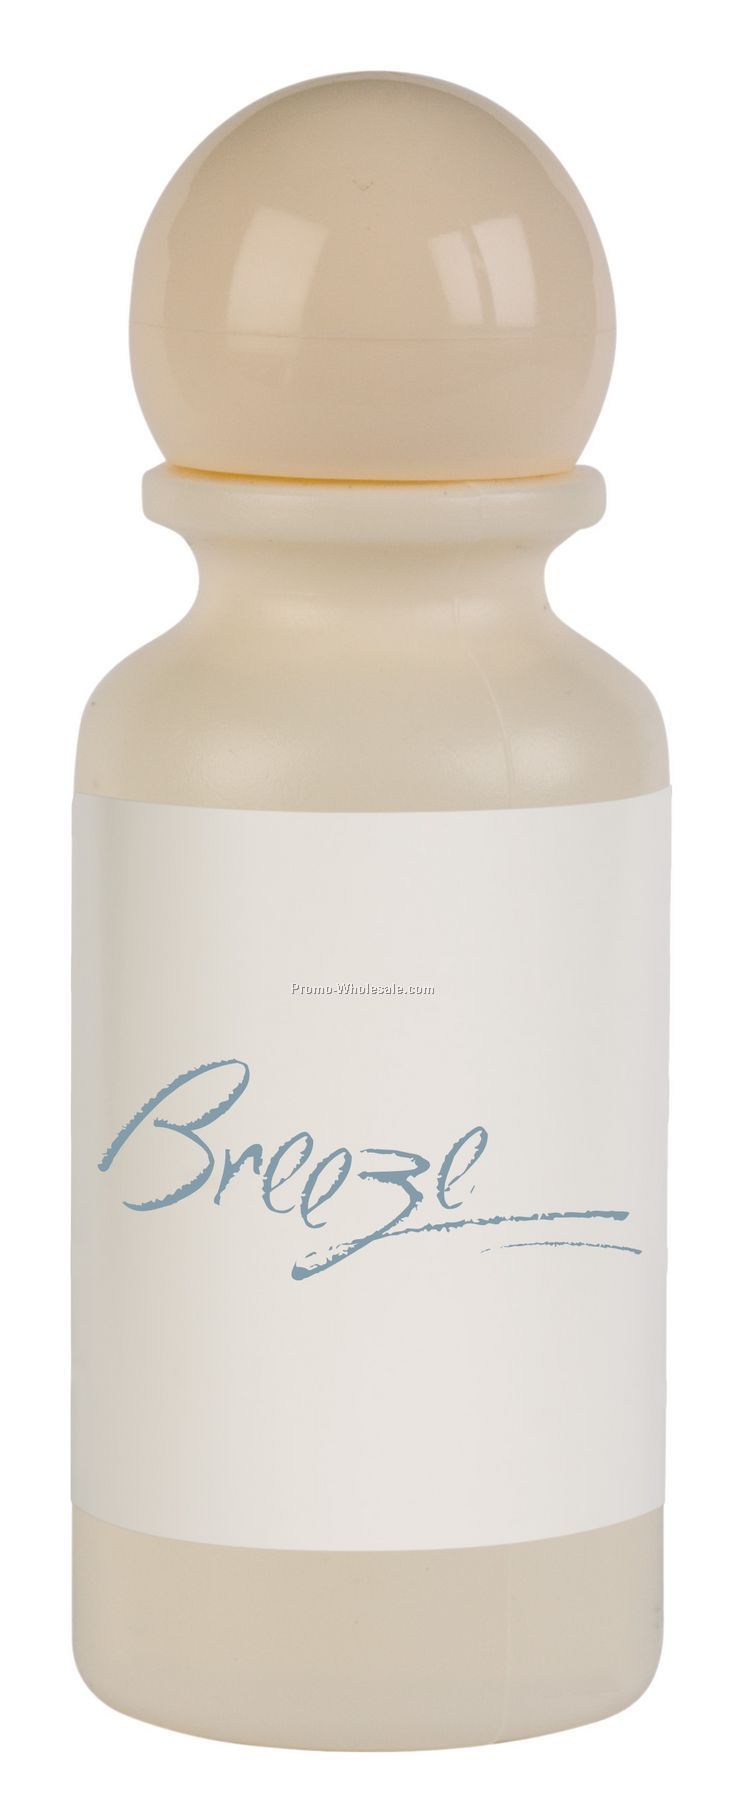 Cream Rinse Conditioner 1 Oz. Apothecary Bottle